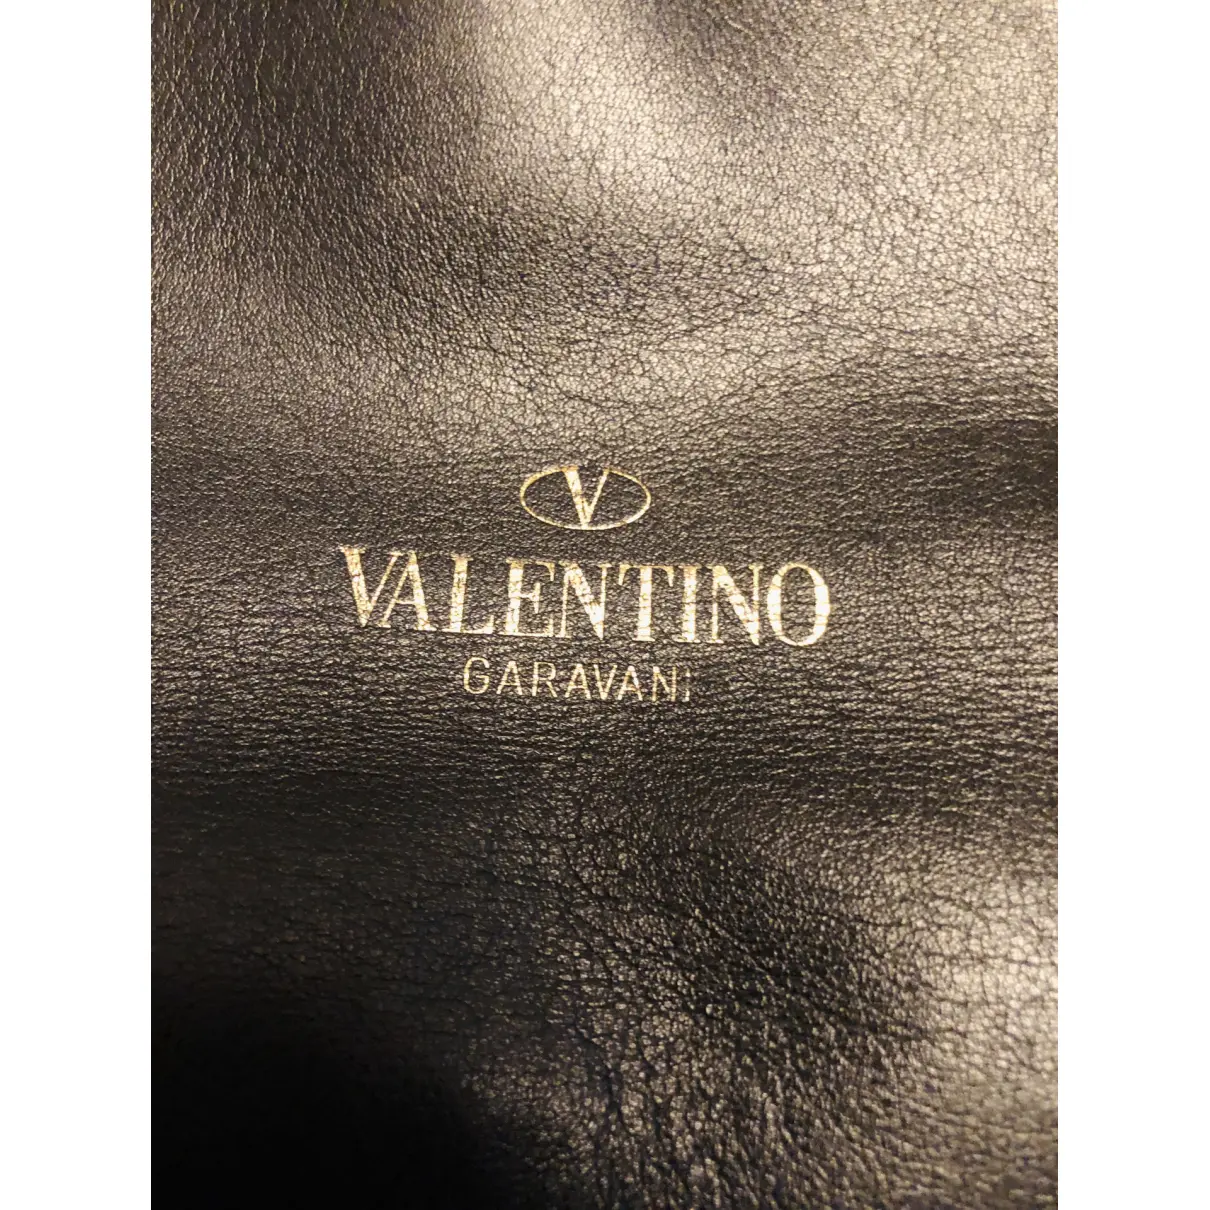 Buy Valentino Garavani Rockstud leather satchel online